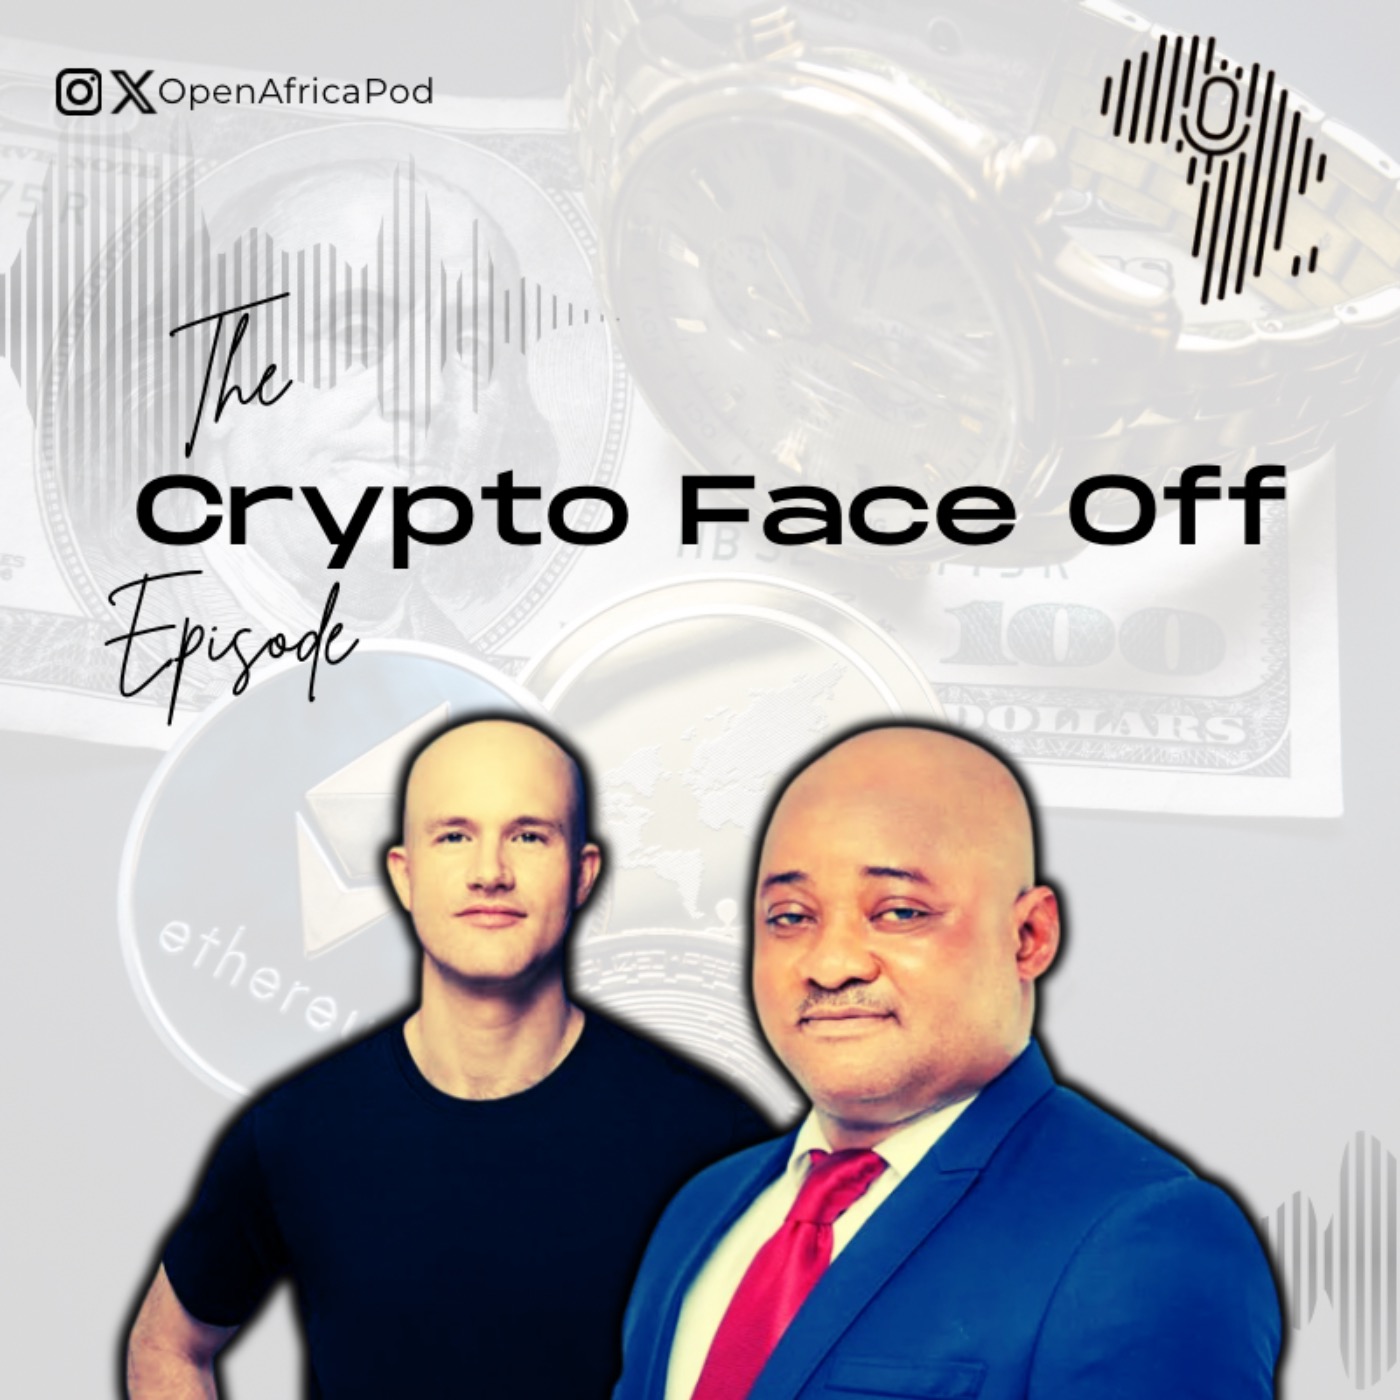 The Crypto Face Off Episode